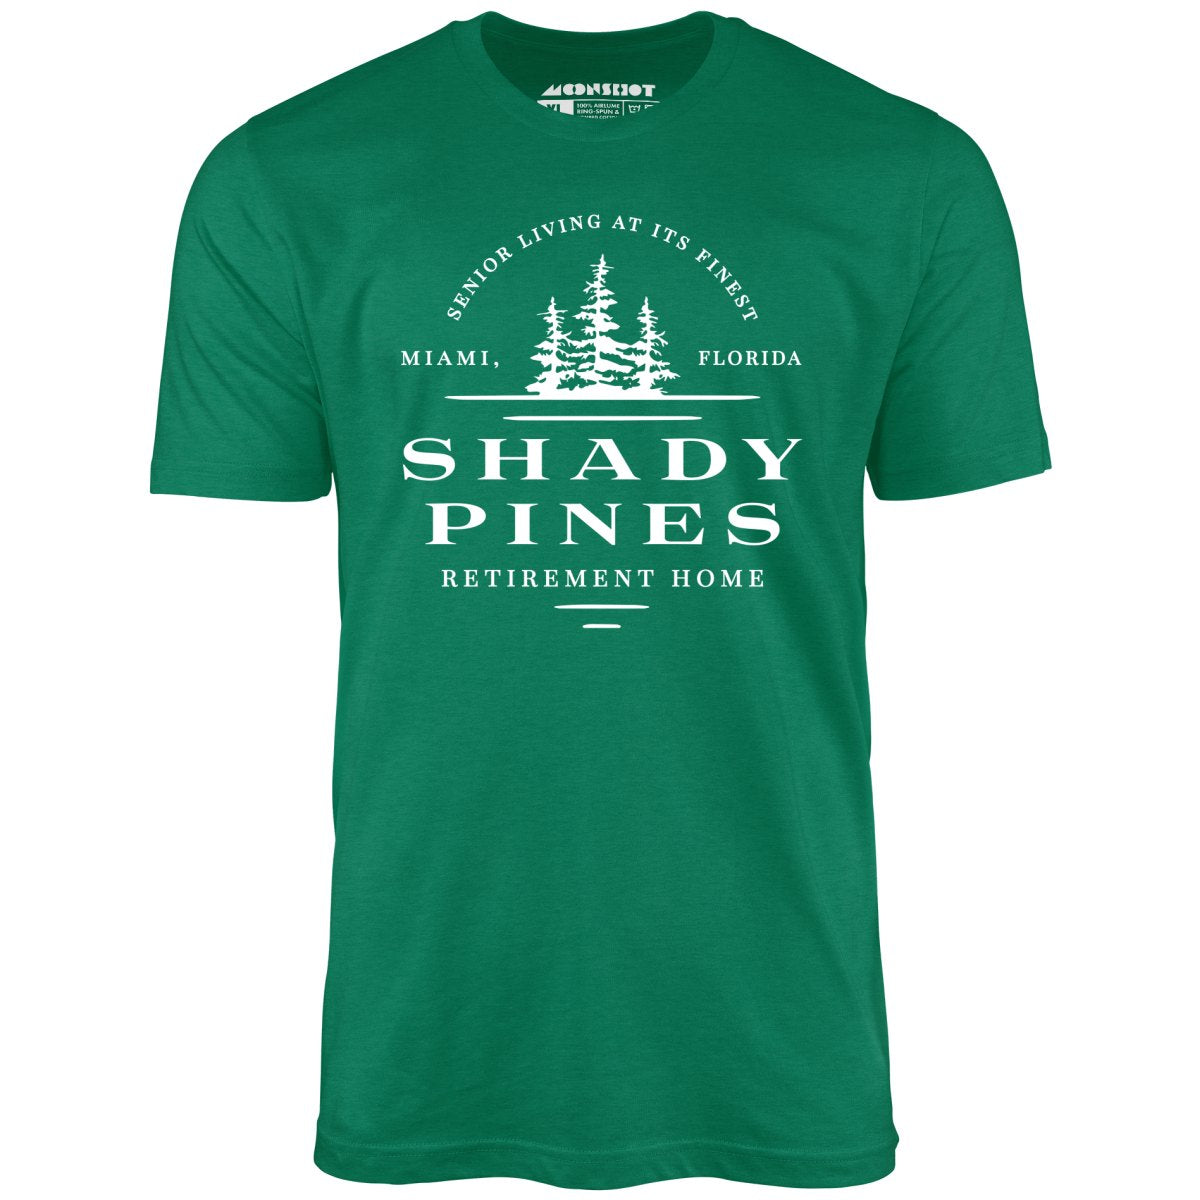 Shady Pines Retirement Home - Unisex T-Shirt